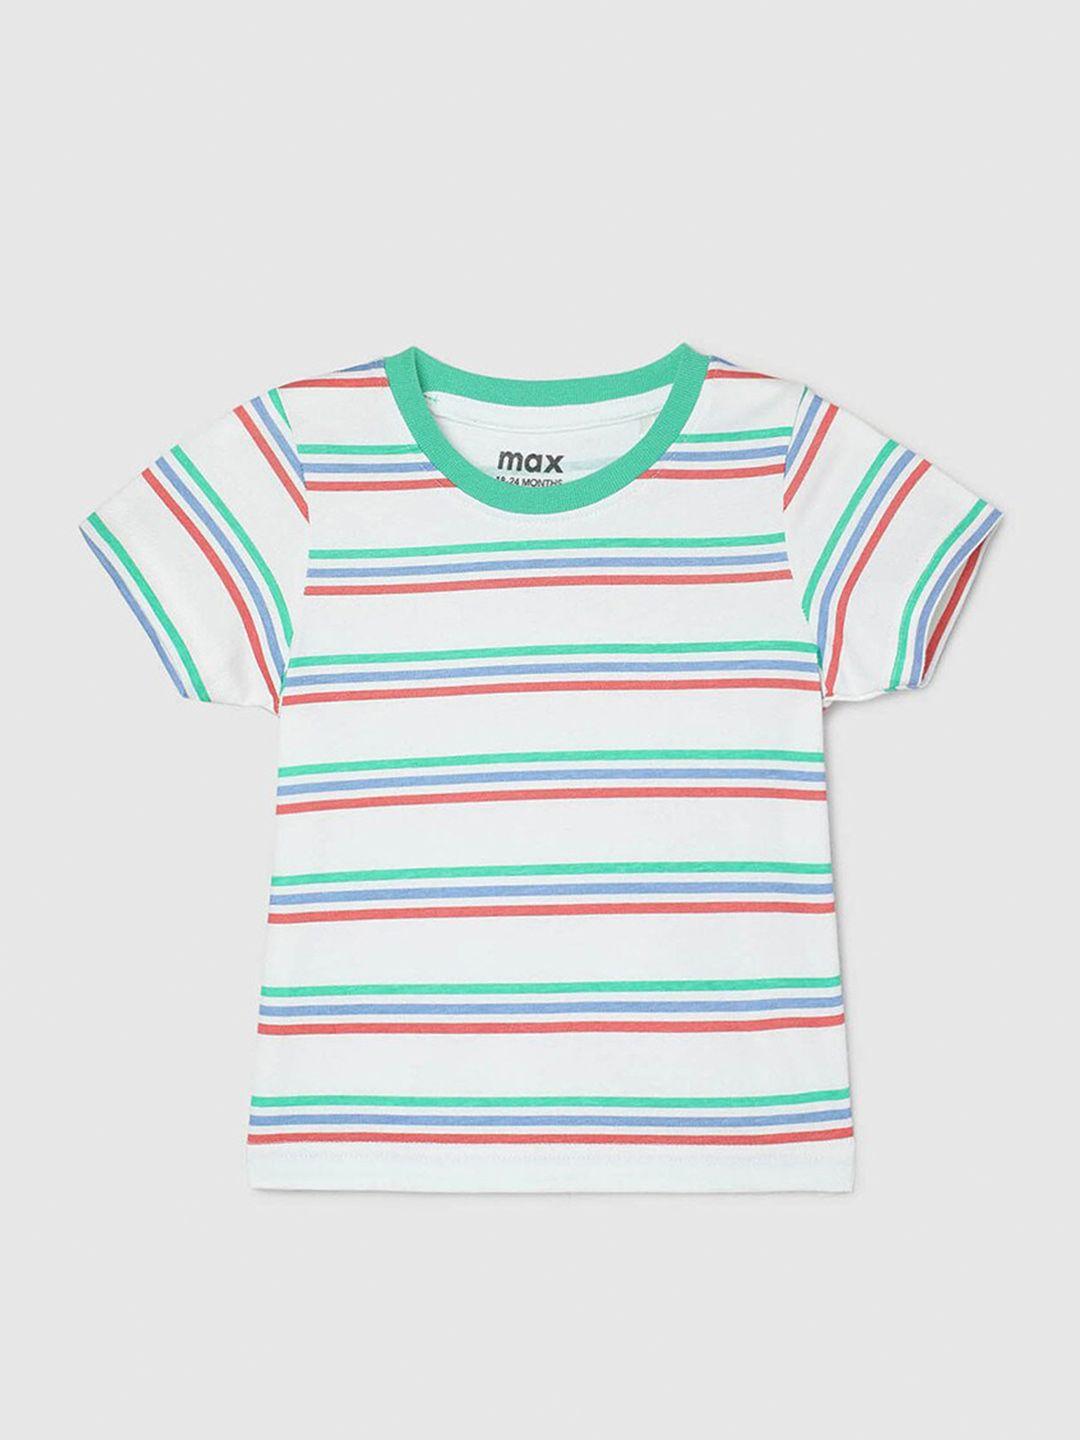 max boys round neck short sleeves striped t-shirt